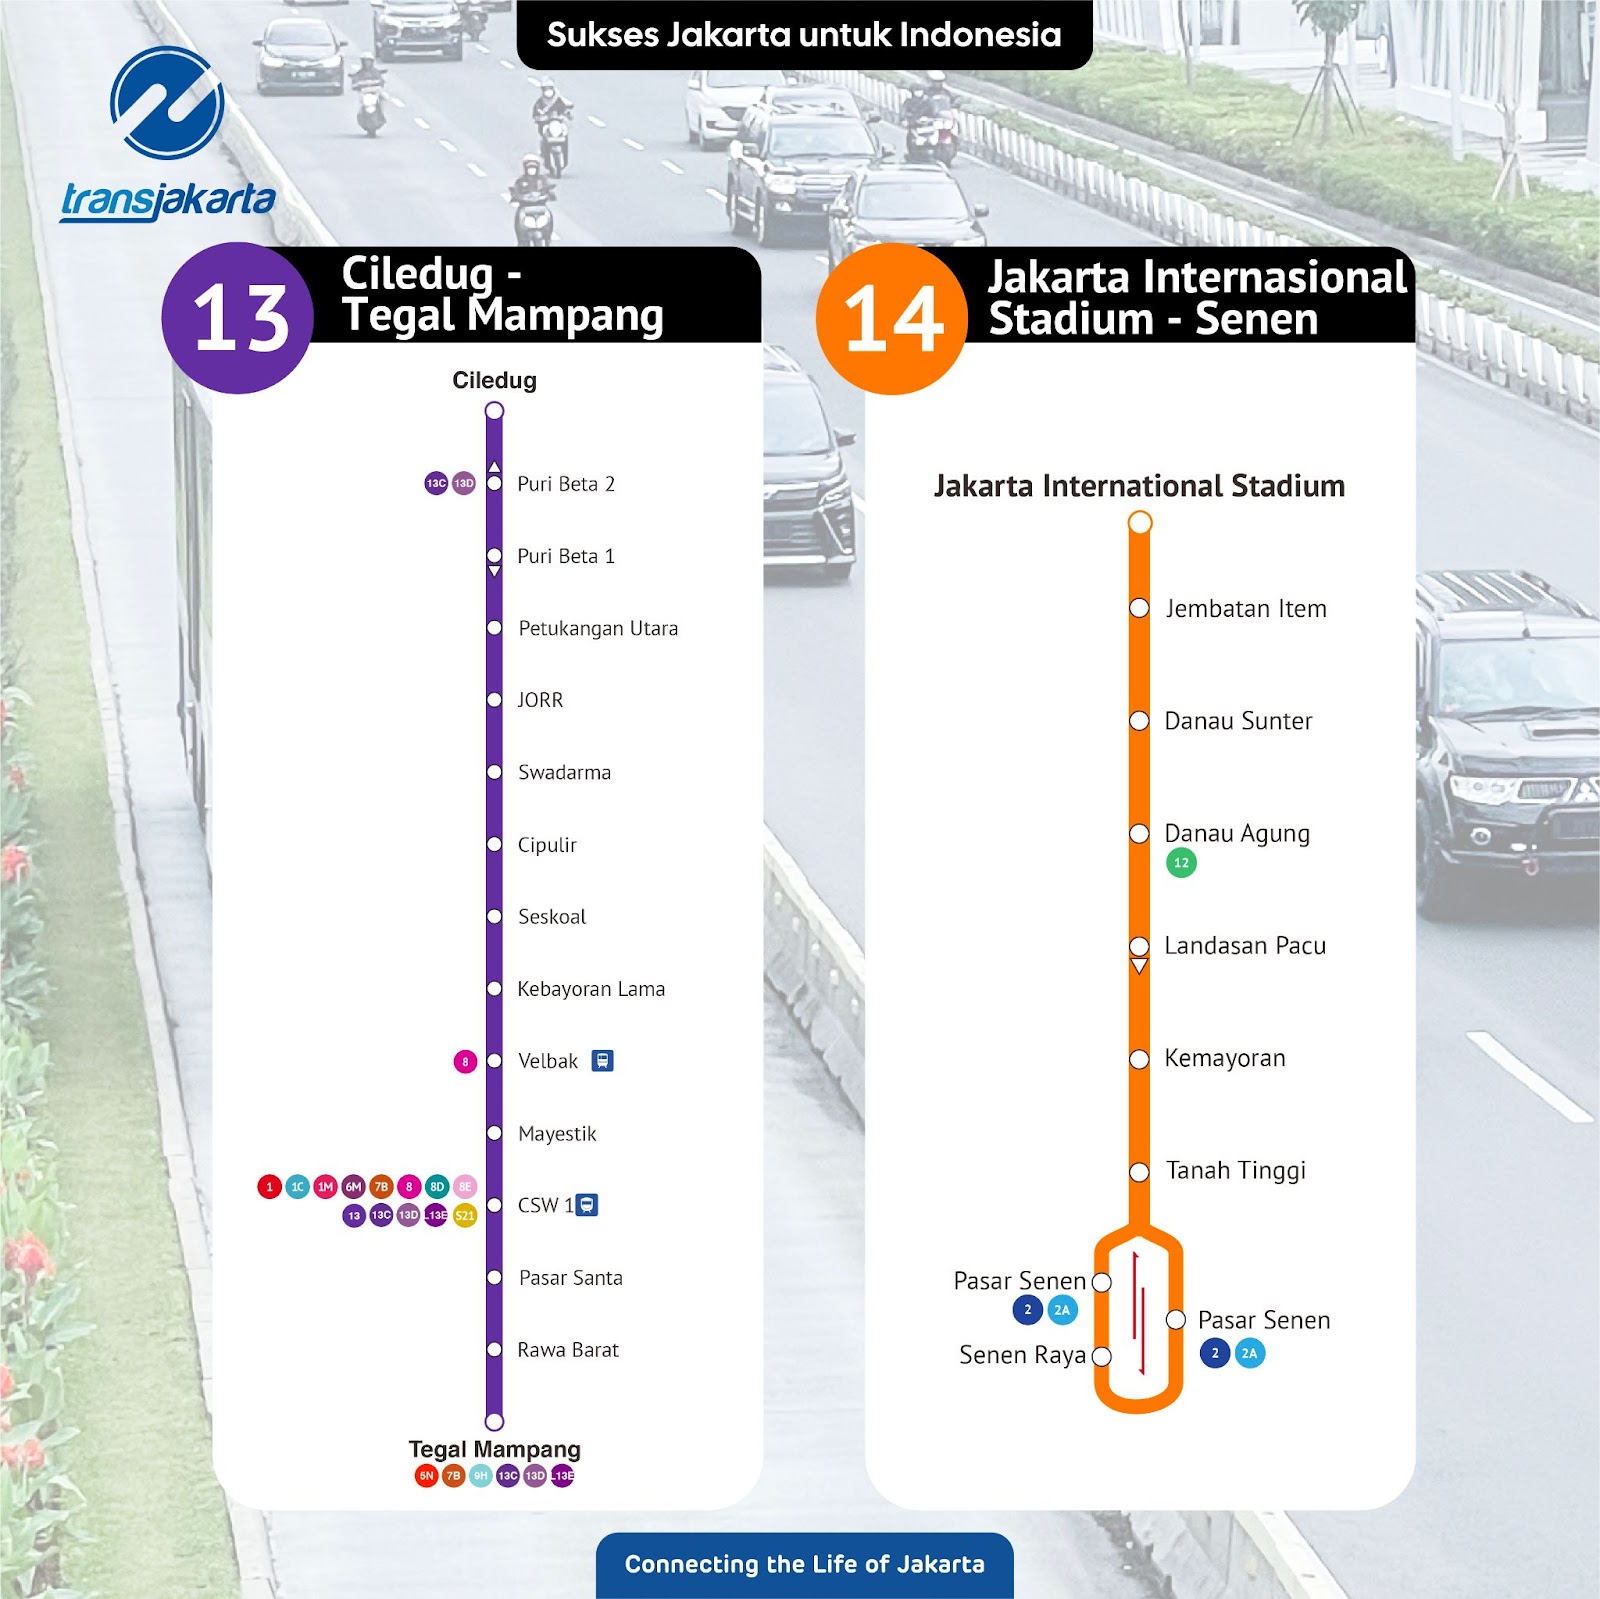 Corridor 13 and corridor 14 routes of Transjakarta. Source:&nbsp;@pt_transjakarta